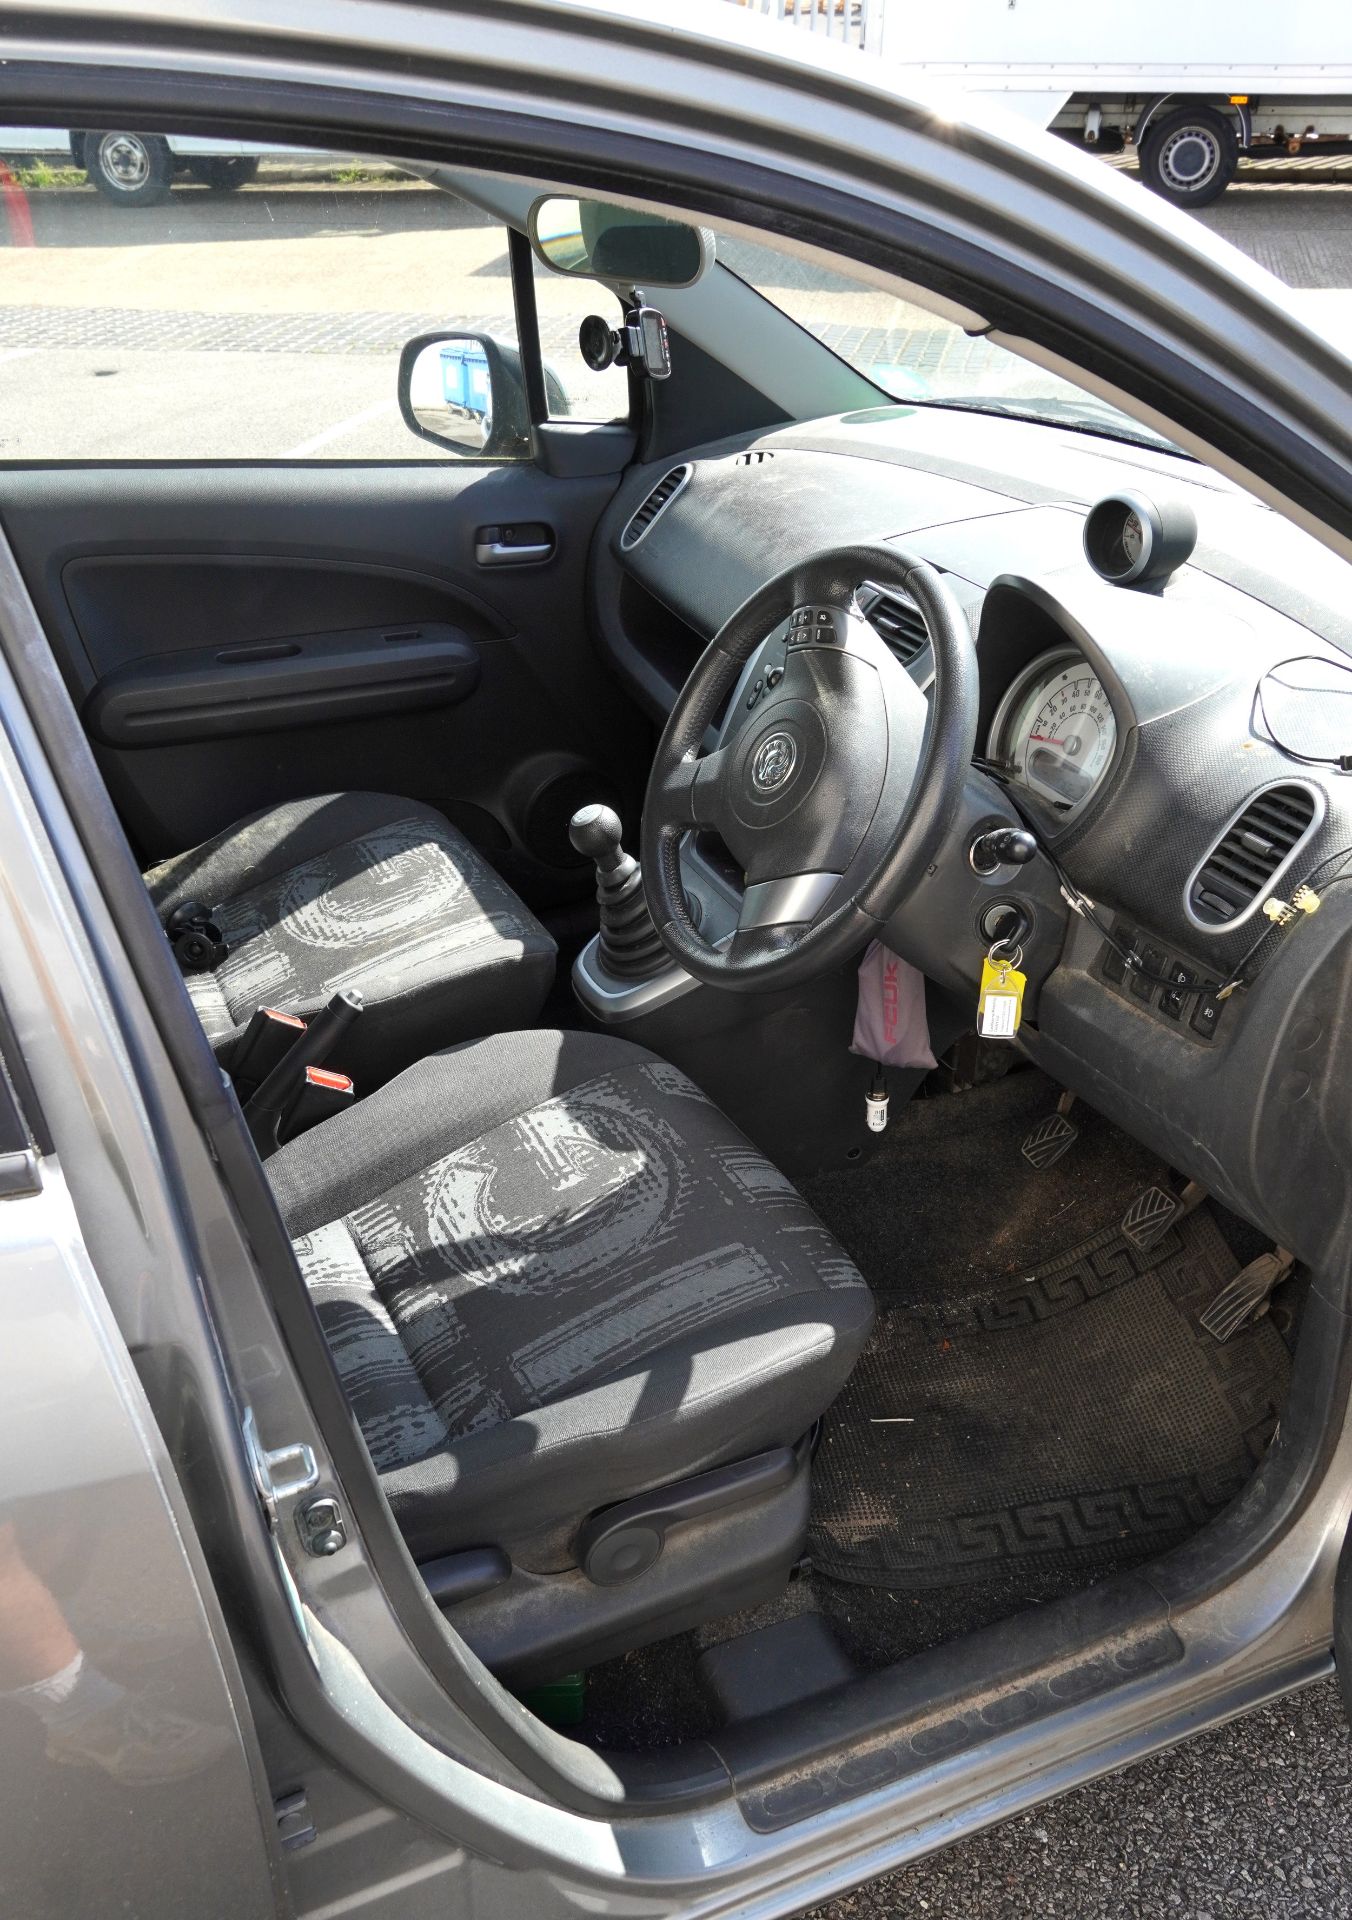 2013 manual Vauxhall Agila, 1.2 liter petrol, five door hatchback, Reg GX63 VFA, 63458 miles, MOT - Bild 10 aus 15